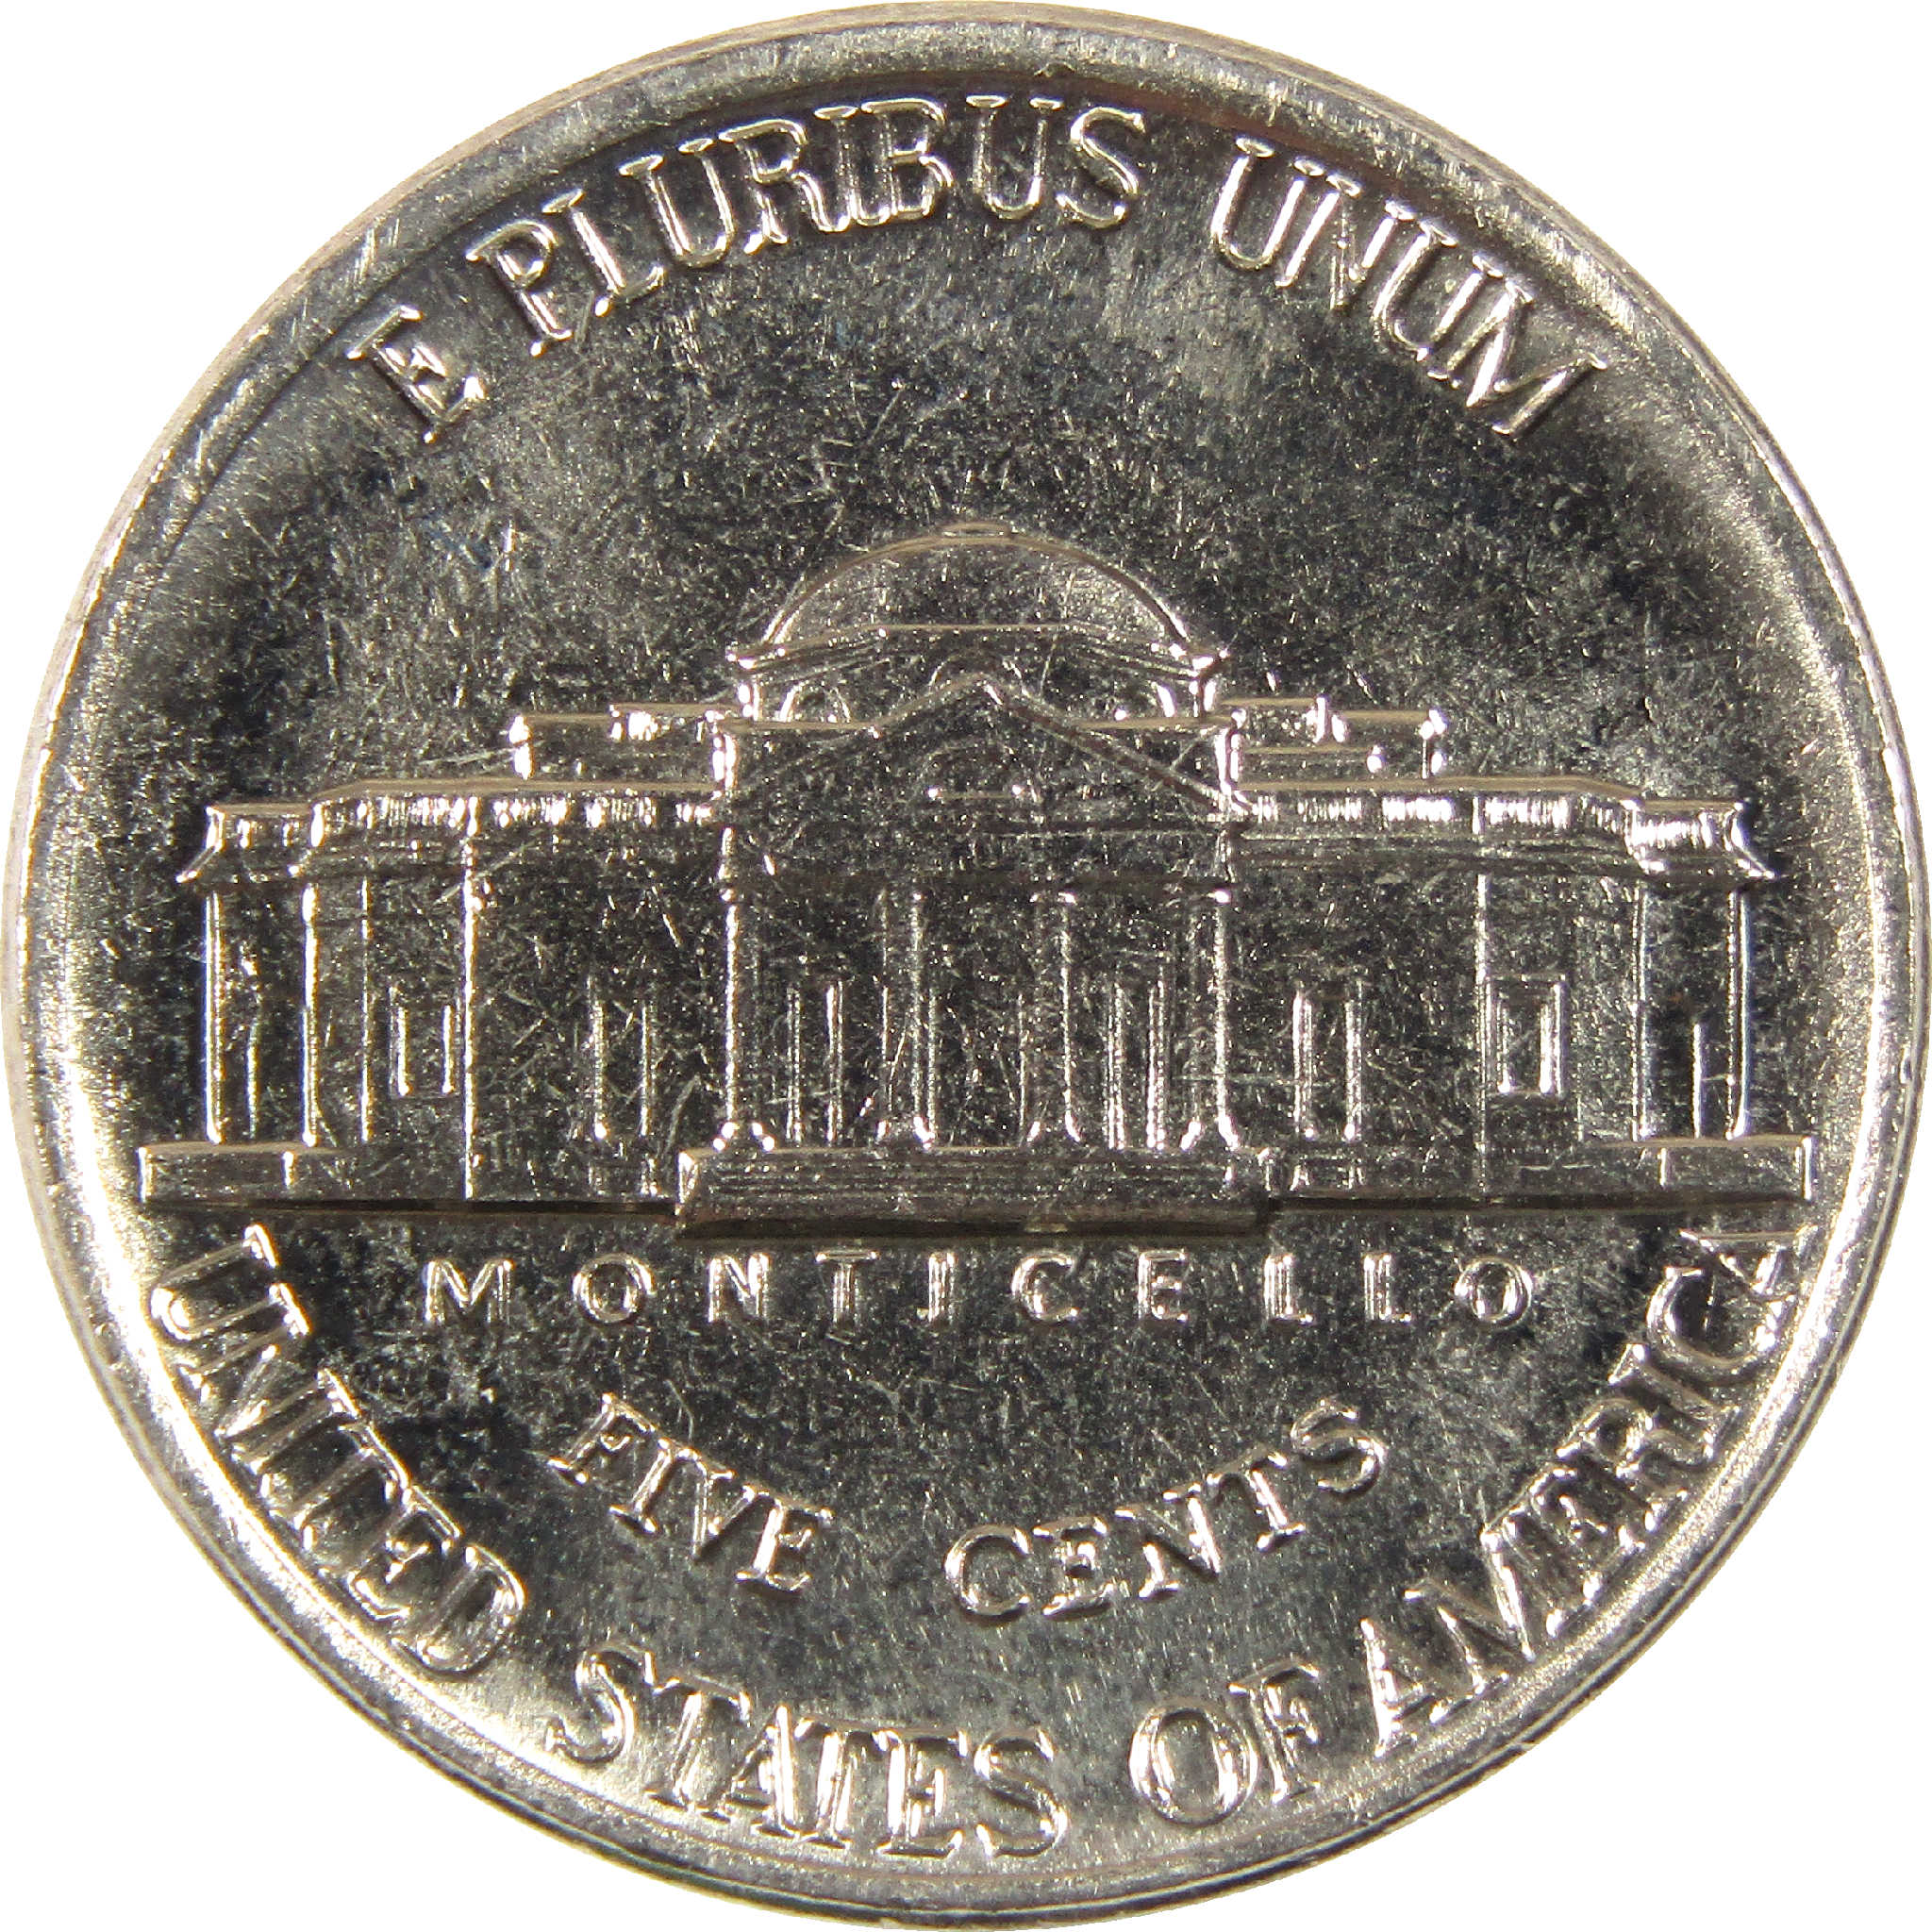 1984 D Jefferson Nickel BU Uncirculated 5c Coin